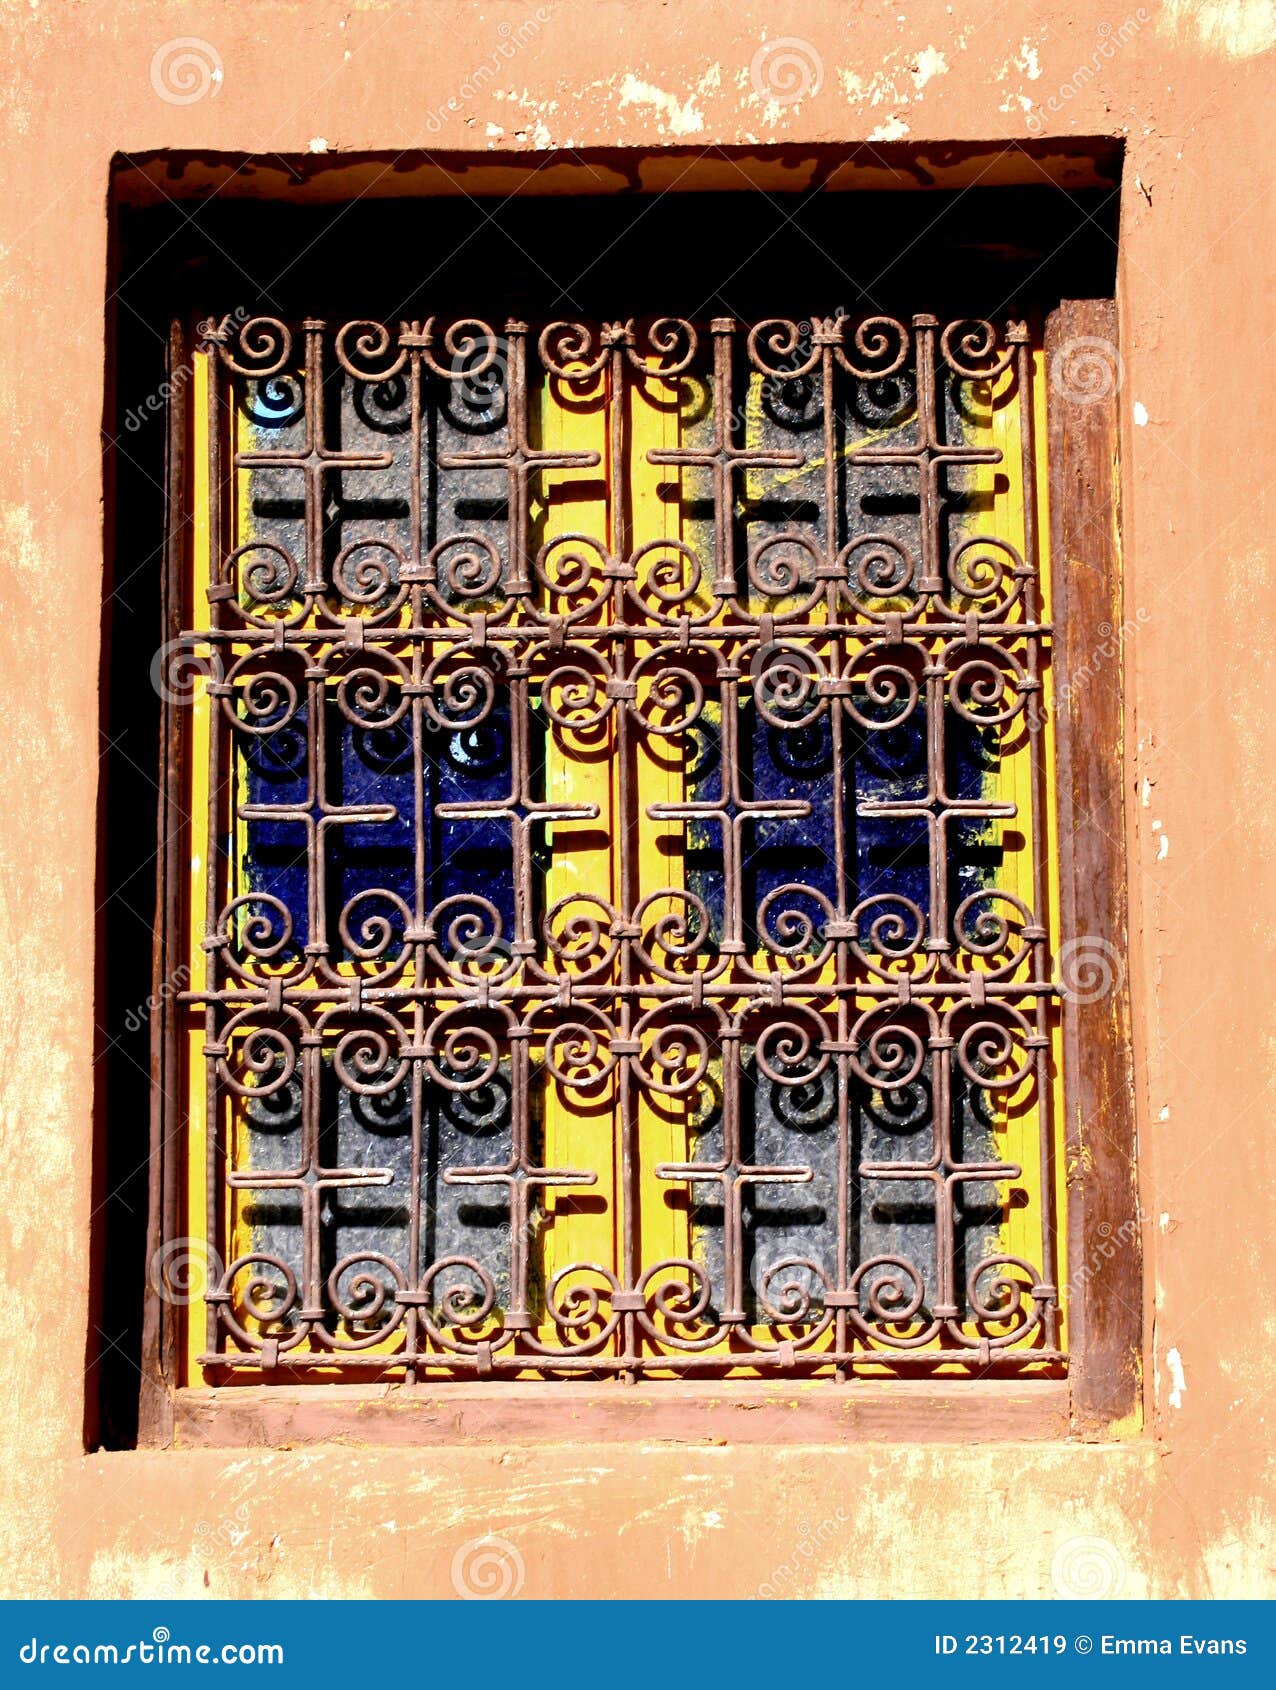 Rustic window stock image. Image of rustic, glass, window - 2312419